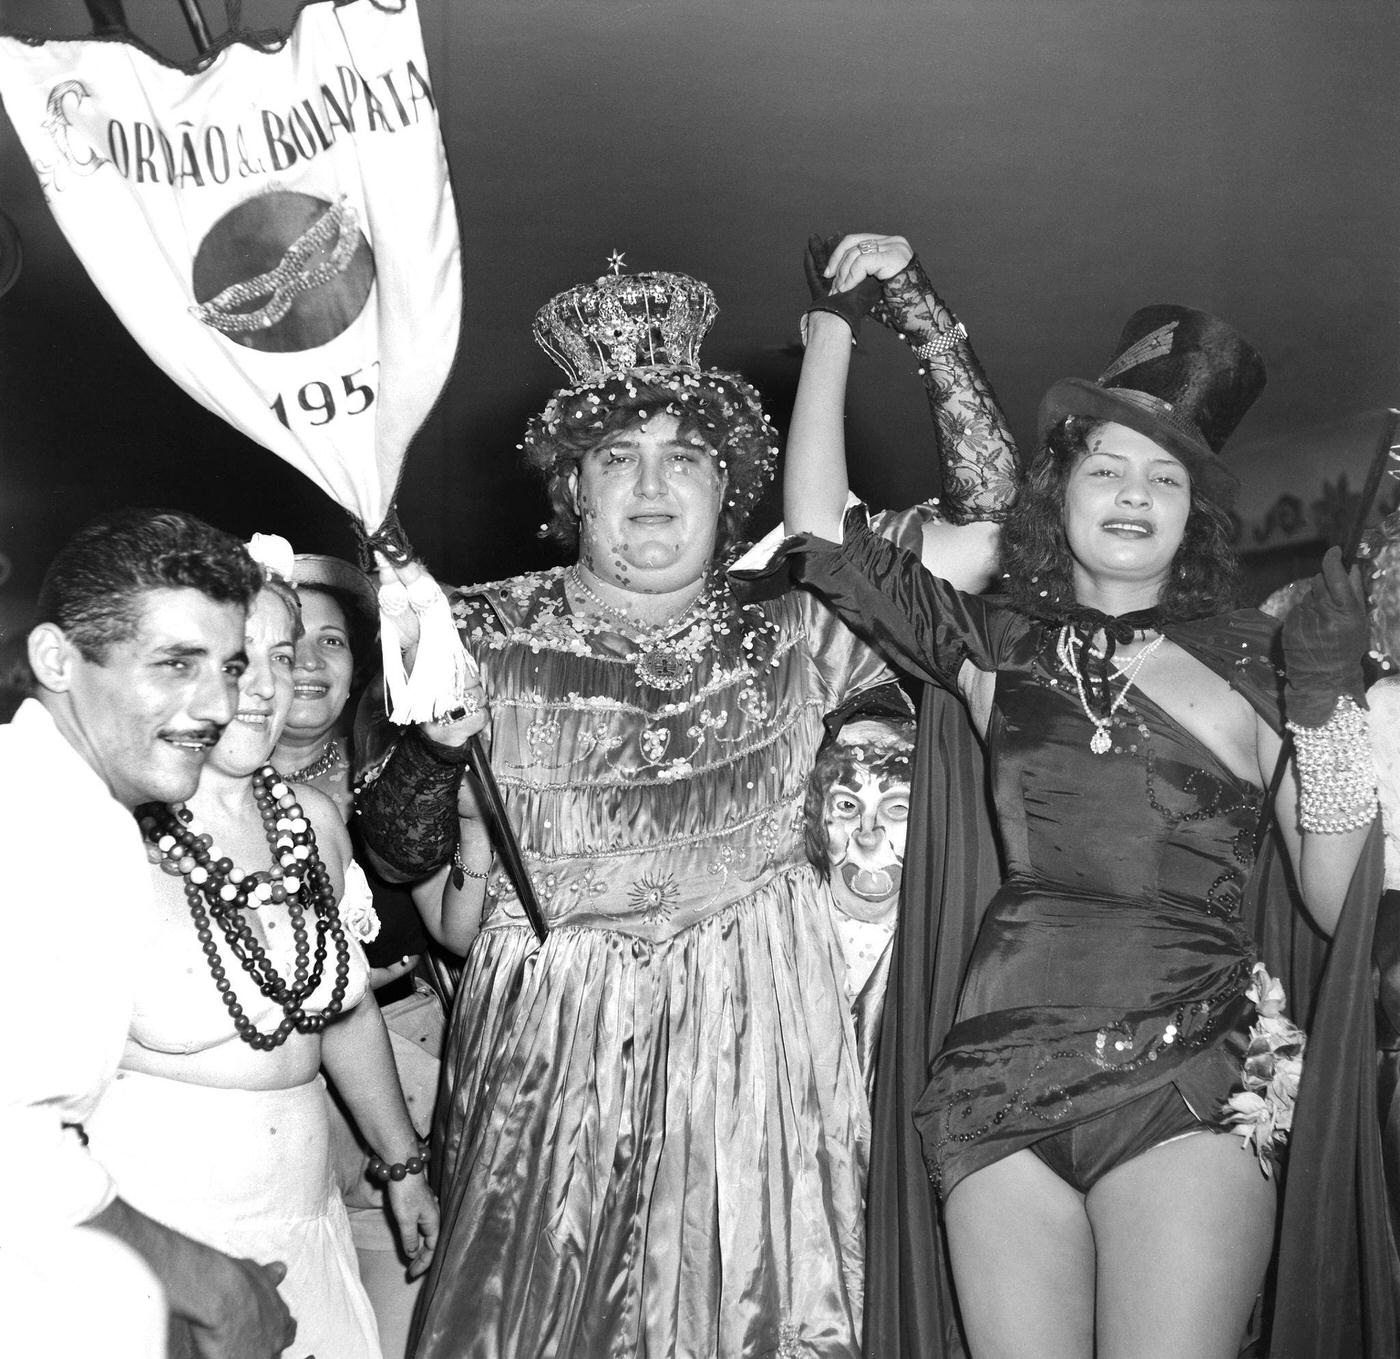 Costumed Partygoers Dancing, Rio Carnival 1953